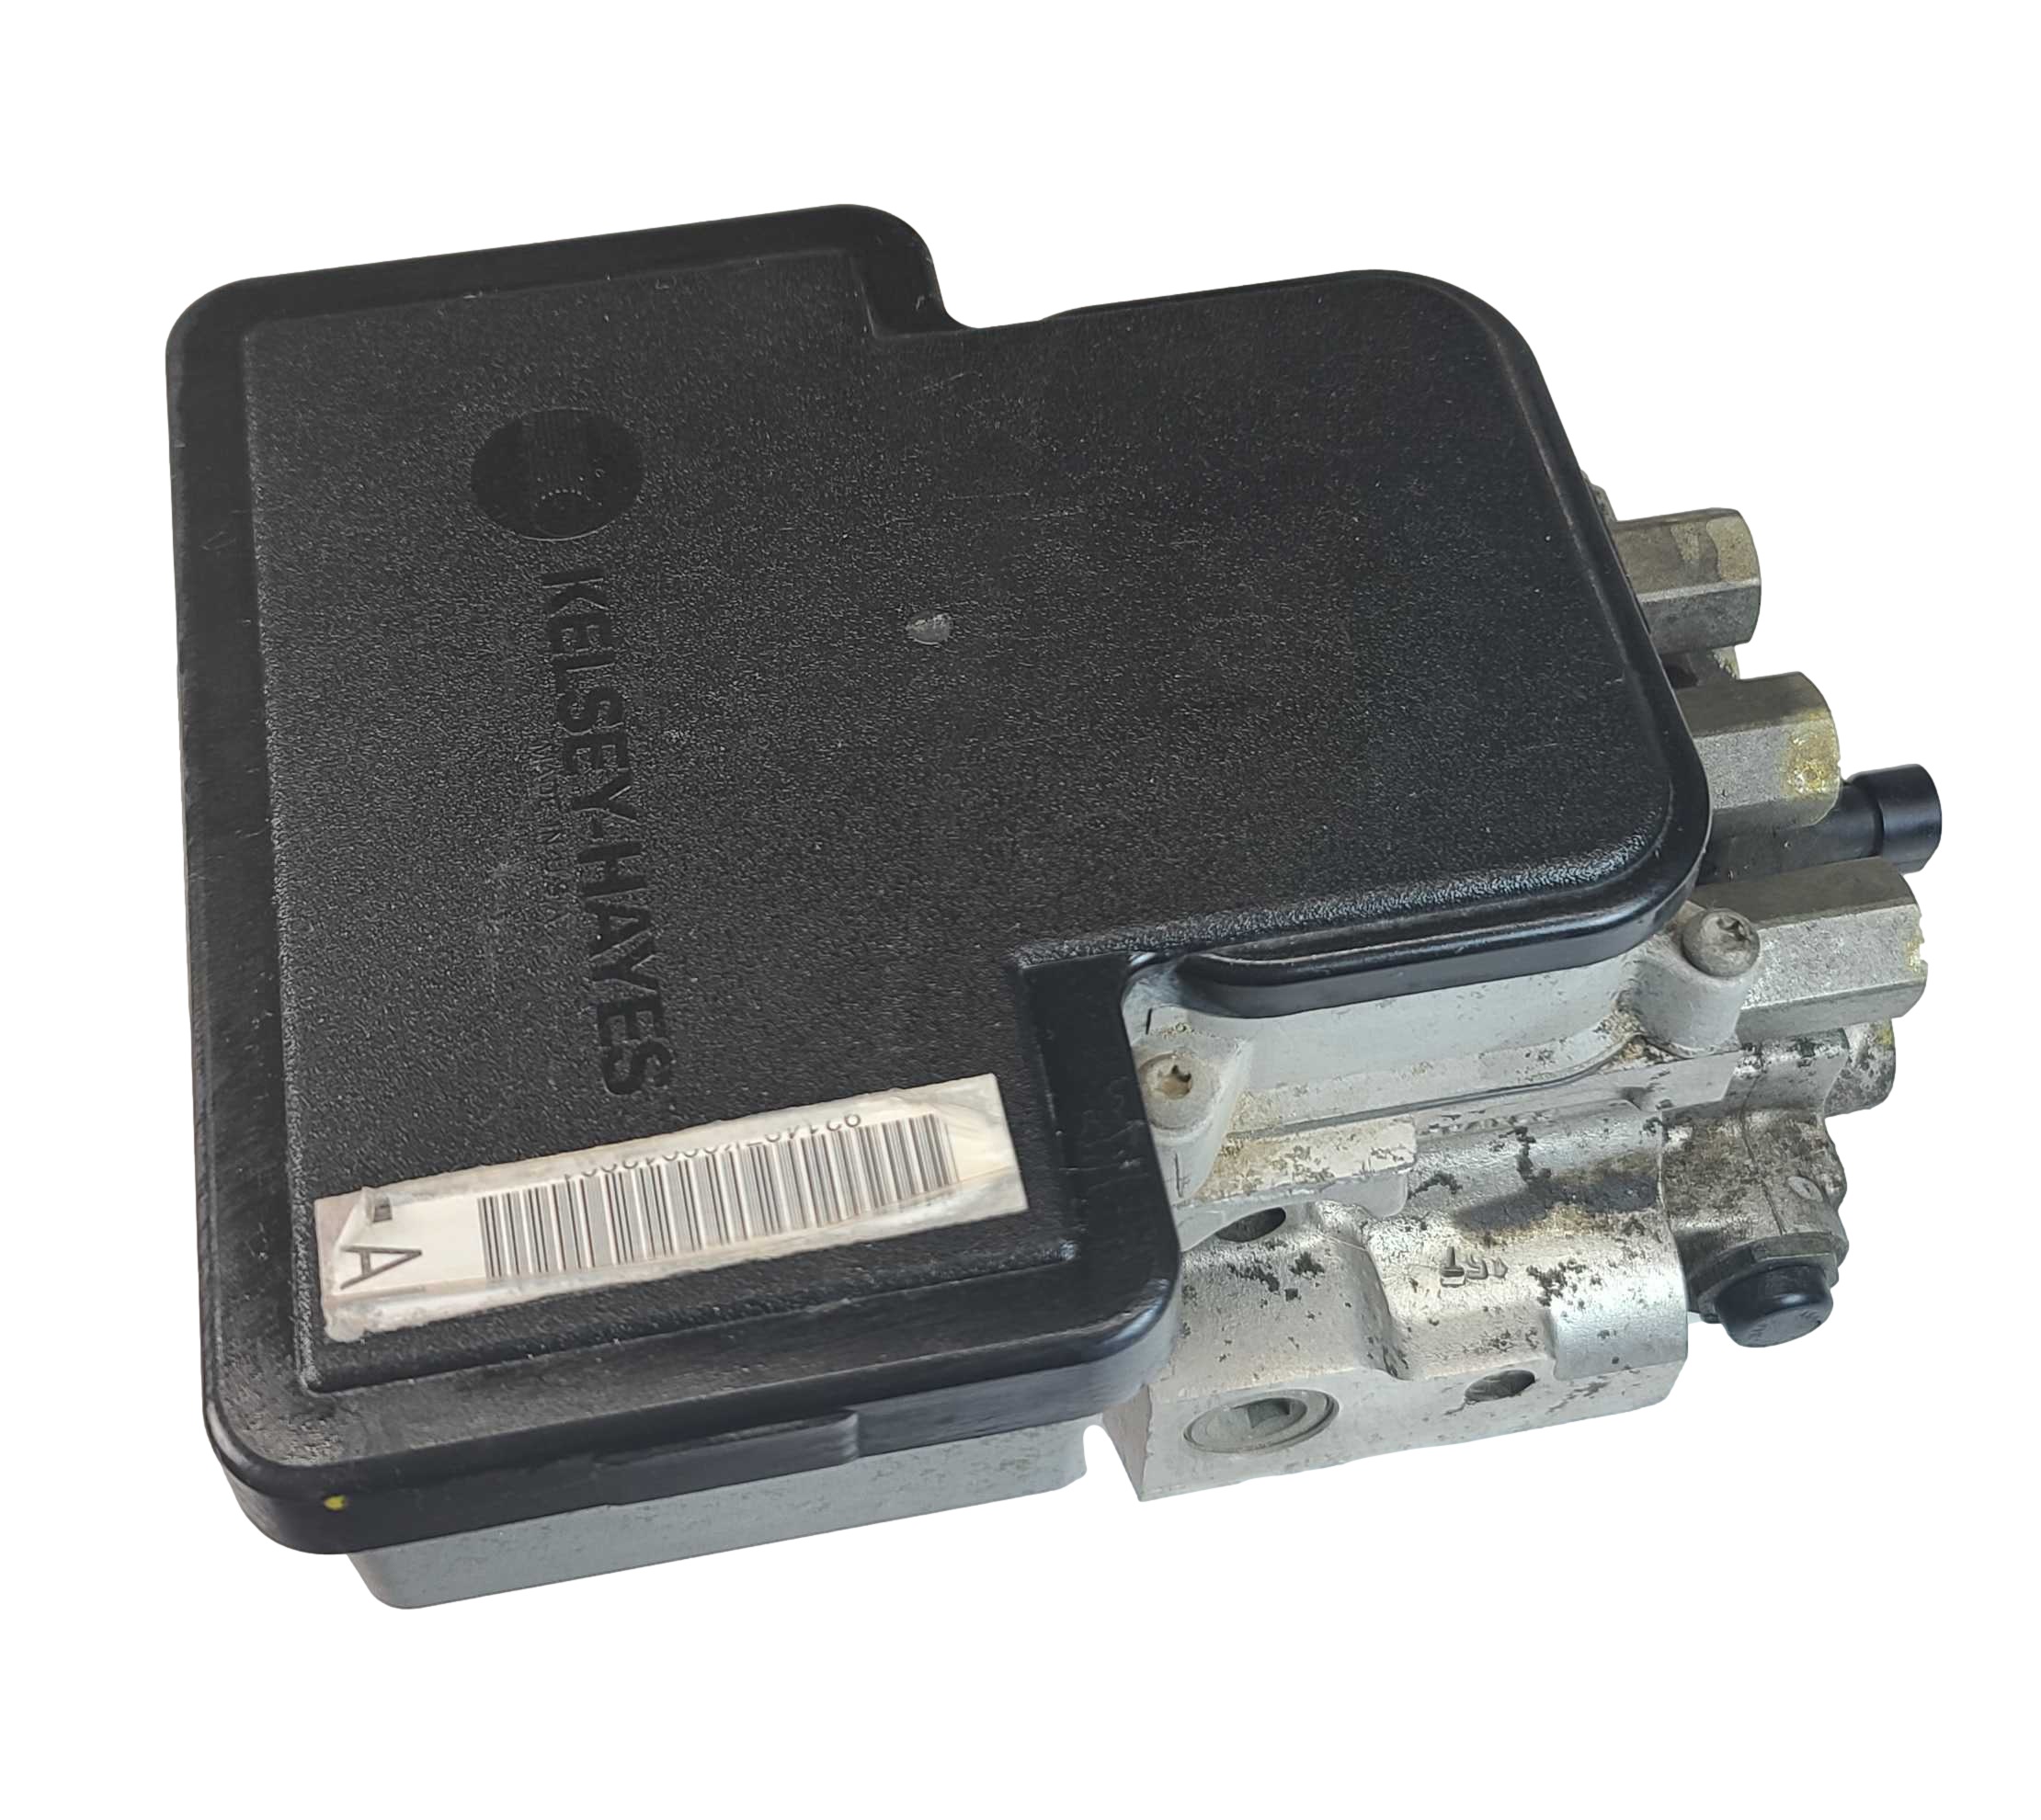 Chevrolet Silverado (1996-1999) ABS EBCM Anti-Lock Brake Control Module Repair Service